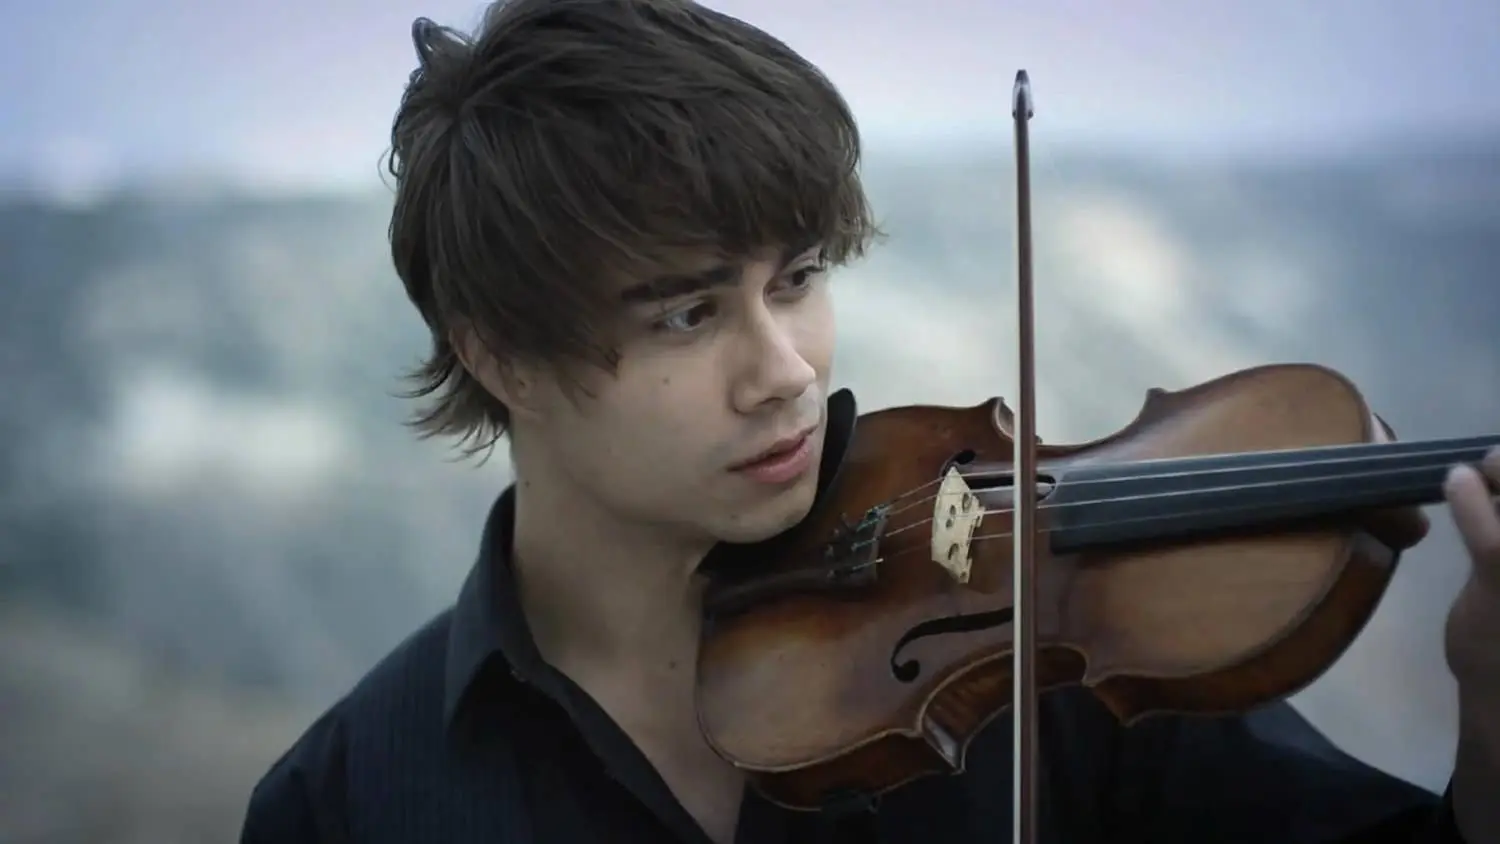 violinista alexander rybak - Alexander Rybak realmente tocaba el violín